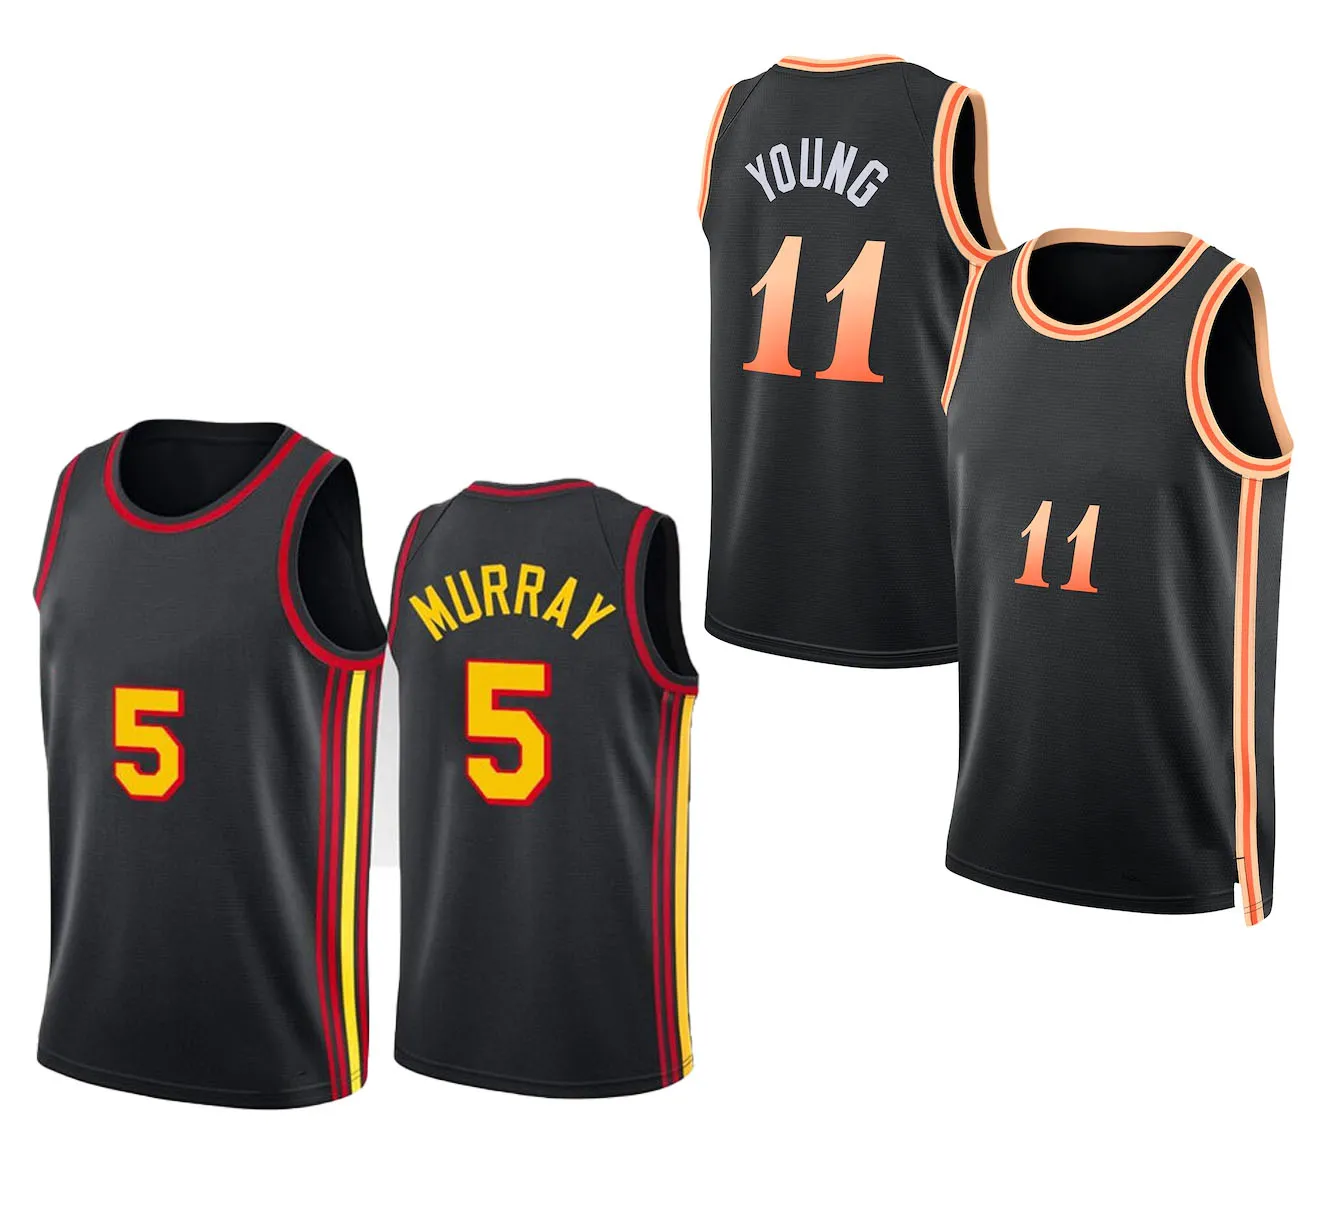 5 Murray 11 Young 2022 баскетбольные майки Yakuda Store Online Wholesale College носят комфортную спортивную одежду спортивные спортивные